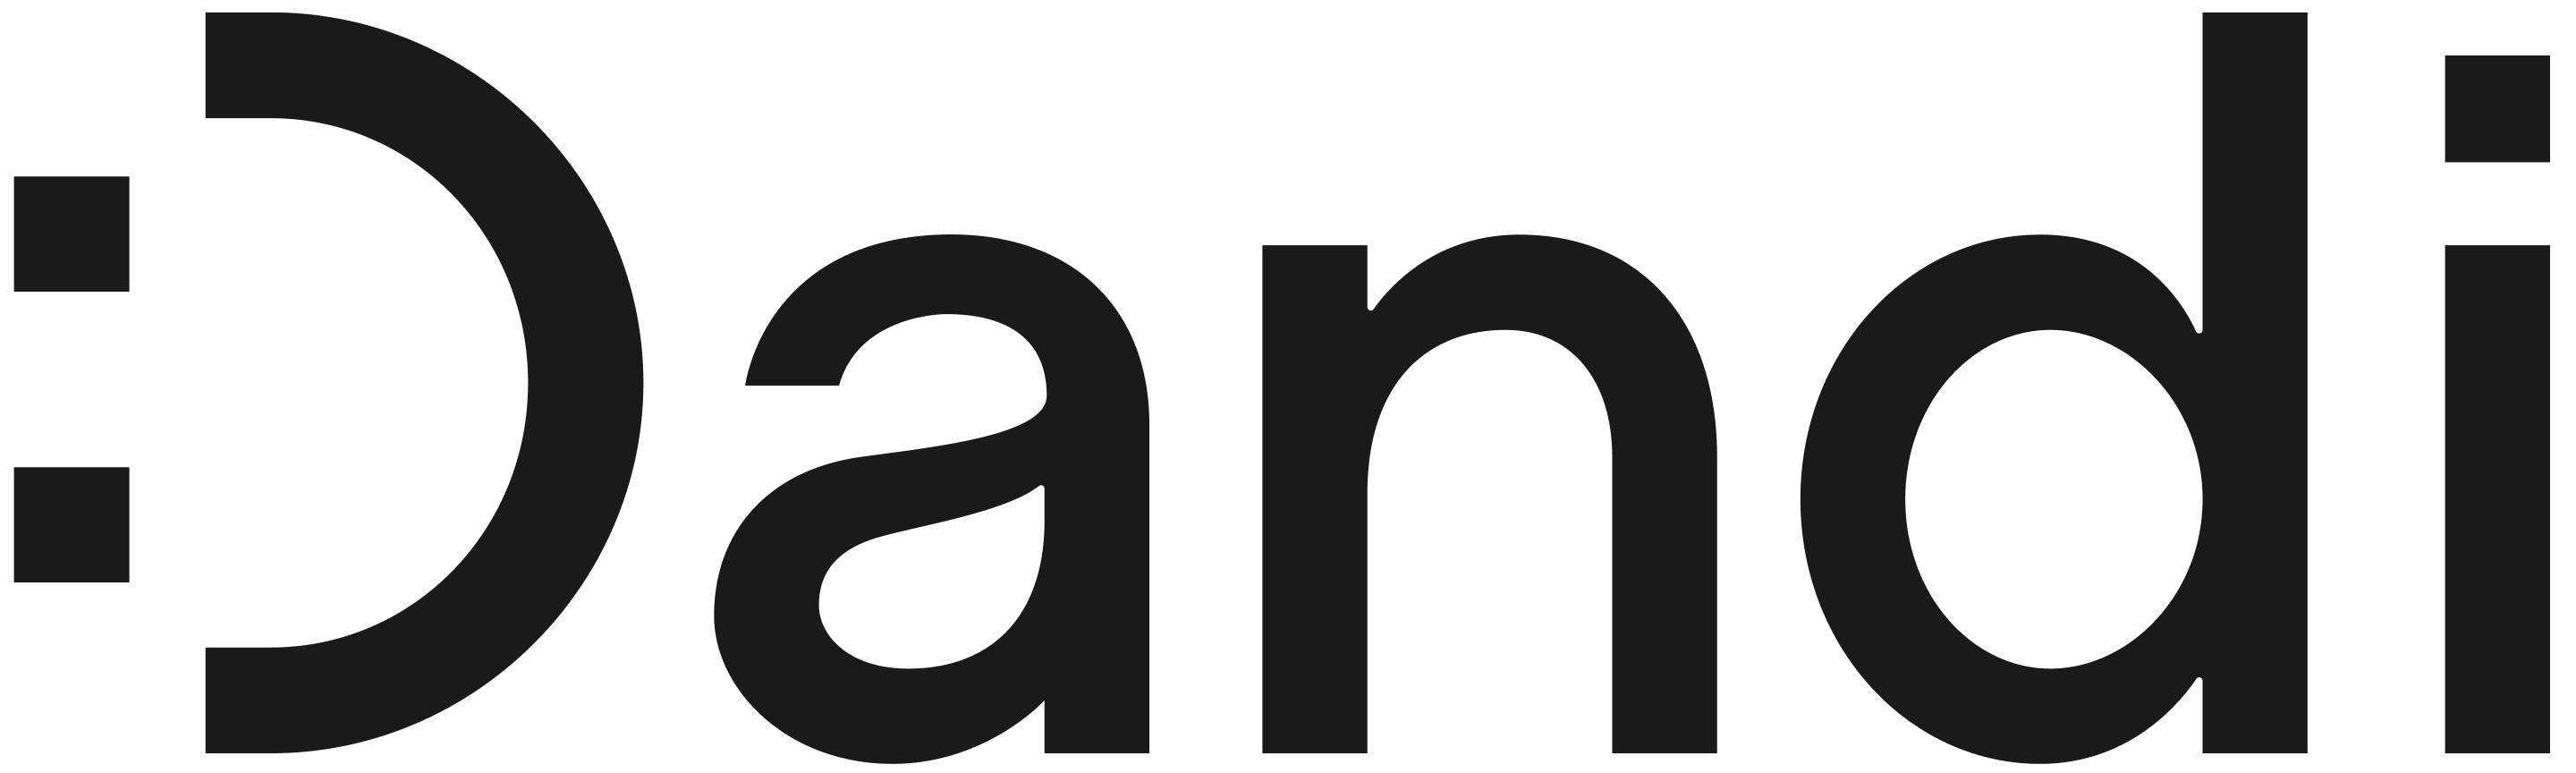 Dandi logo